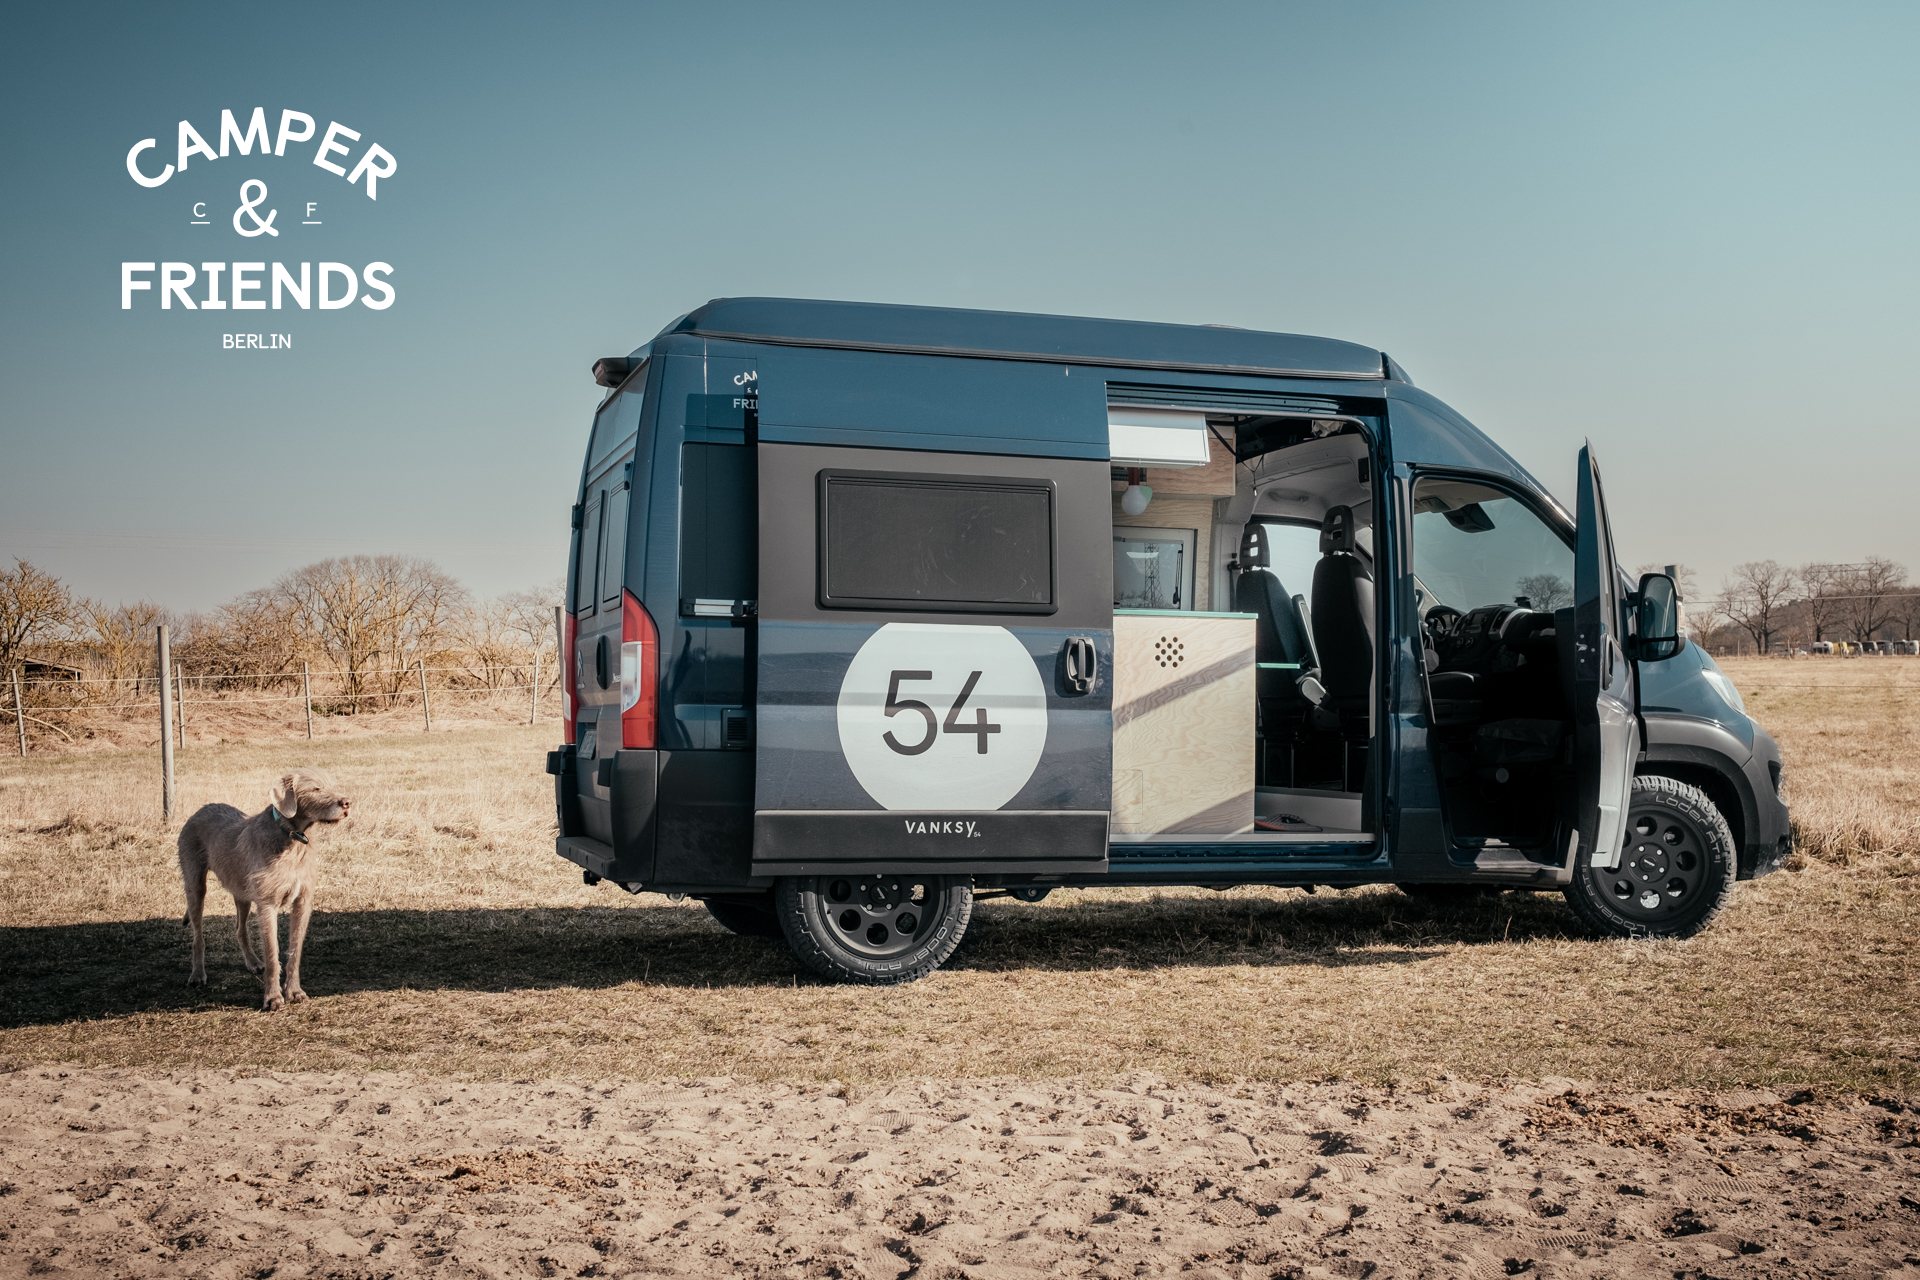 Peugeot Boxer 4x4 Concept Wohnmobil: Campingbus mit Abenteuer